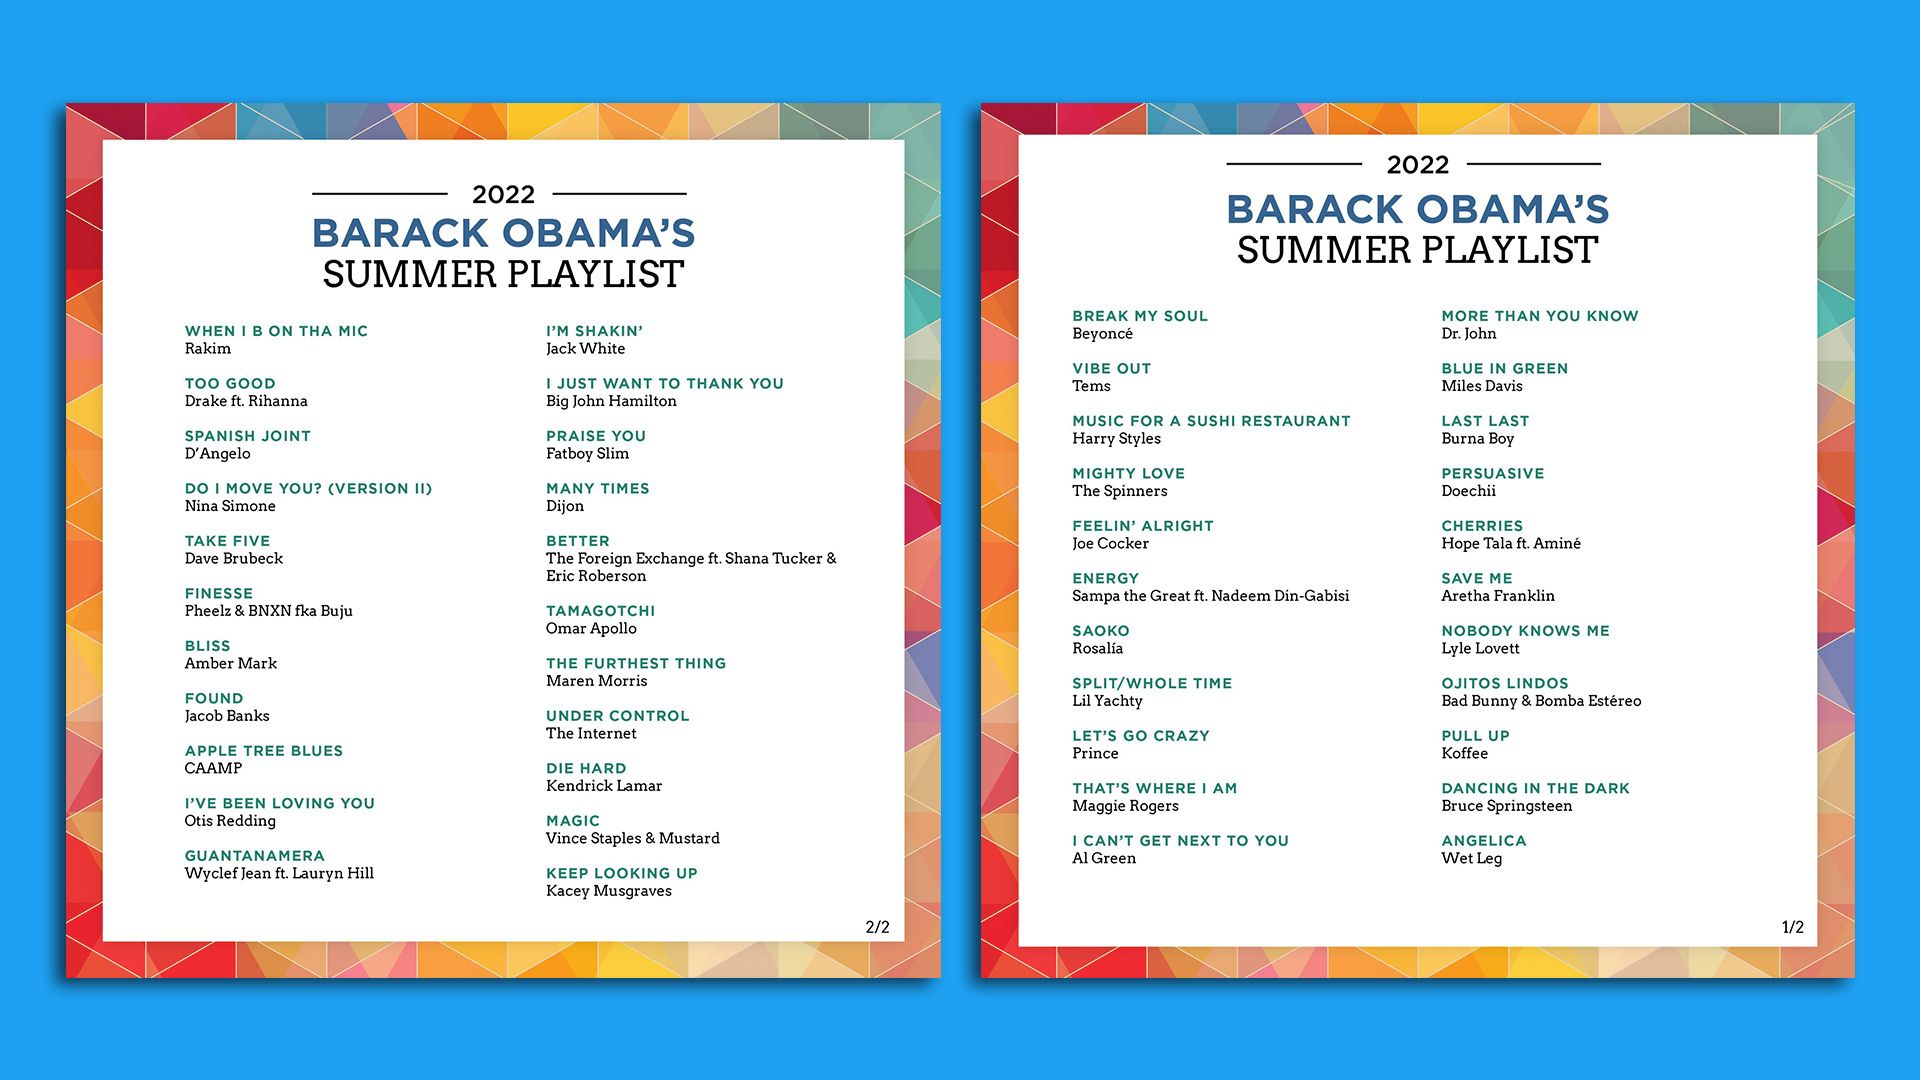 A photo of Barack Obama's summer playlist 2022 that includes Beyoncé's "Break My Soul."